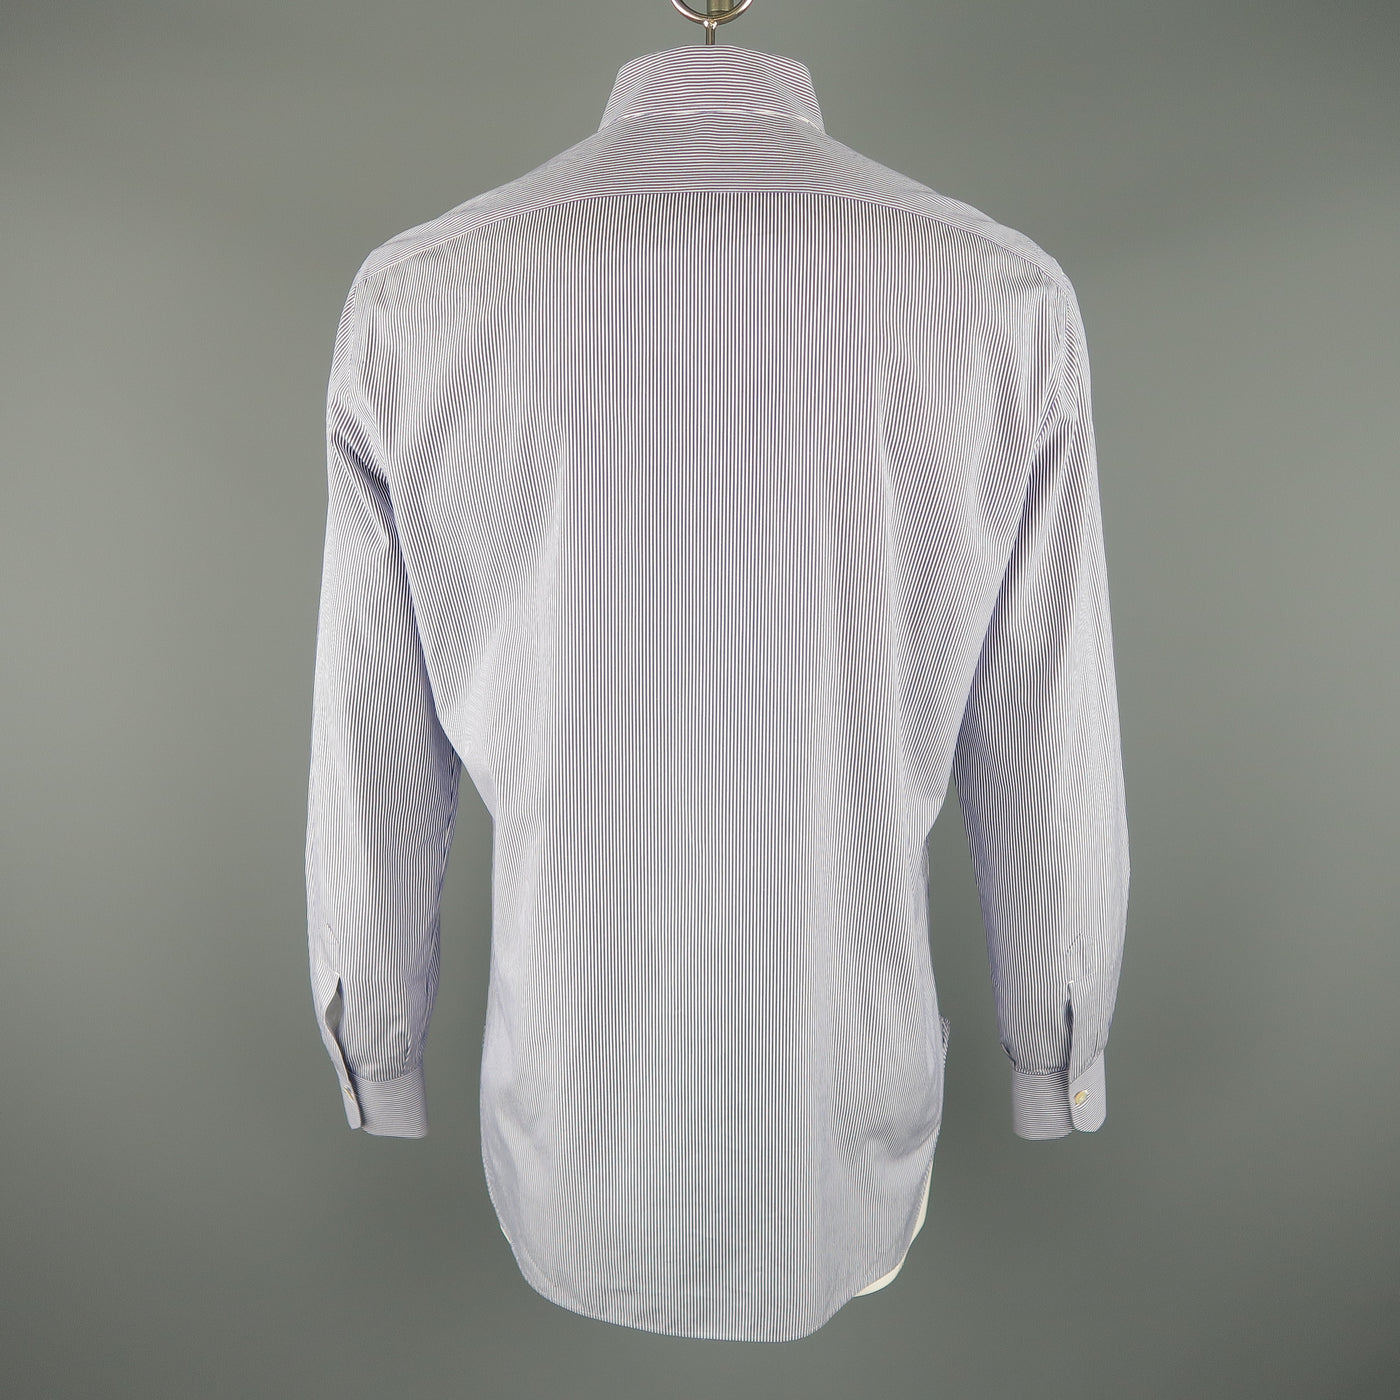 KITON Size L Navy Pinstripe Cotton Button Up Long Sleeve Shirt